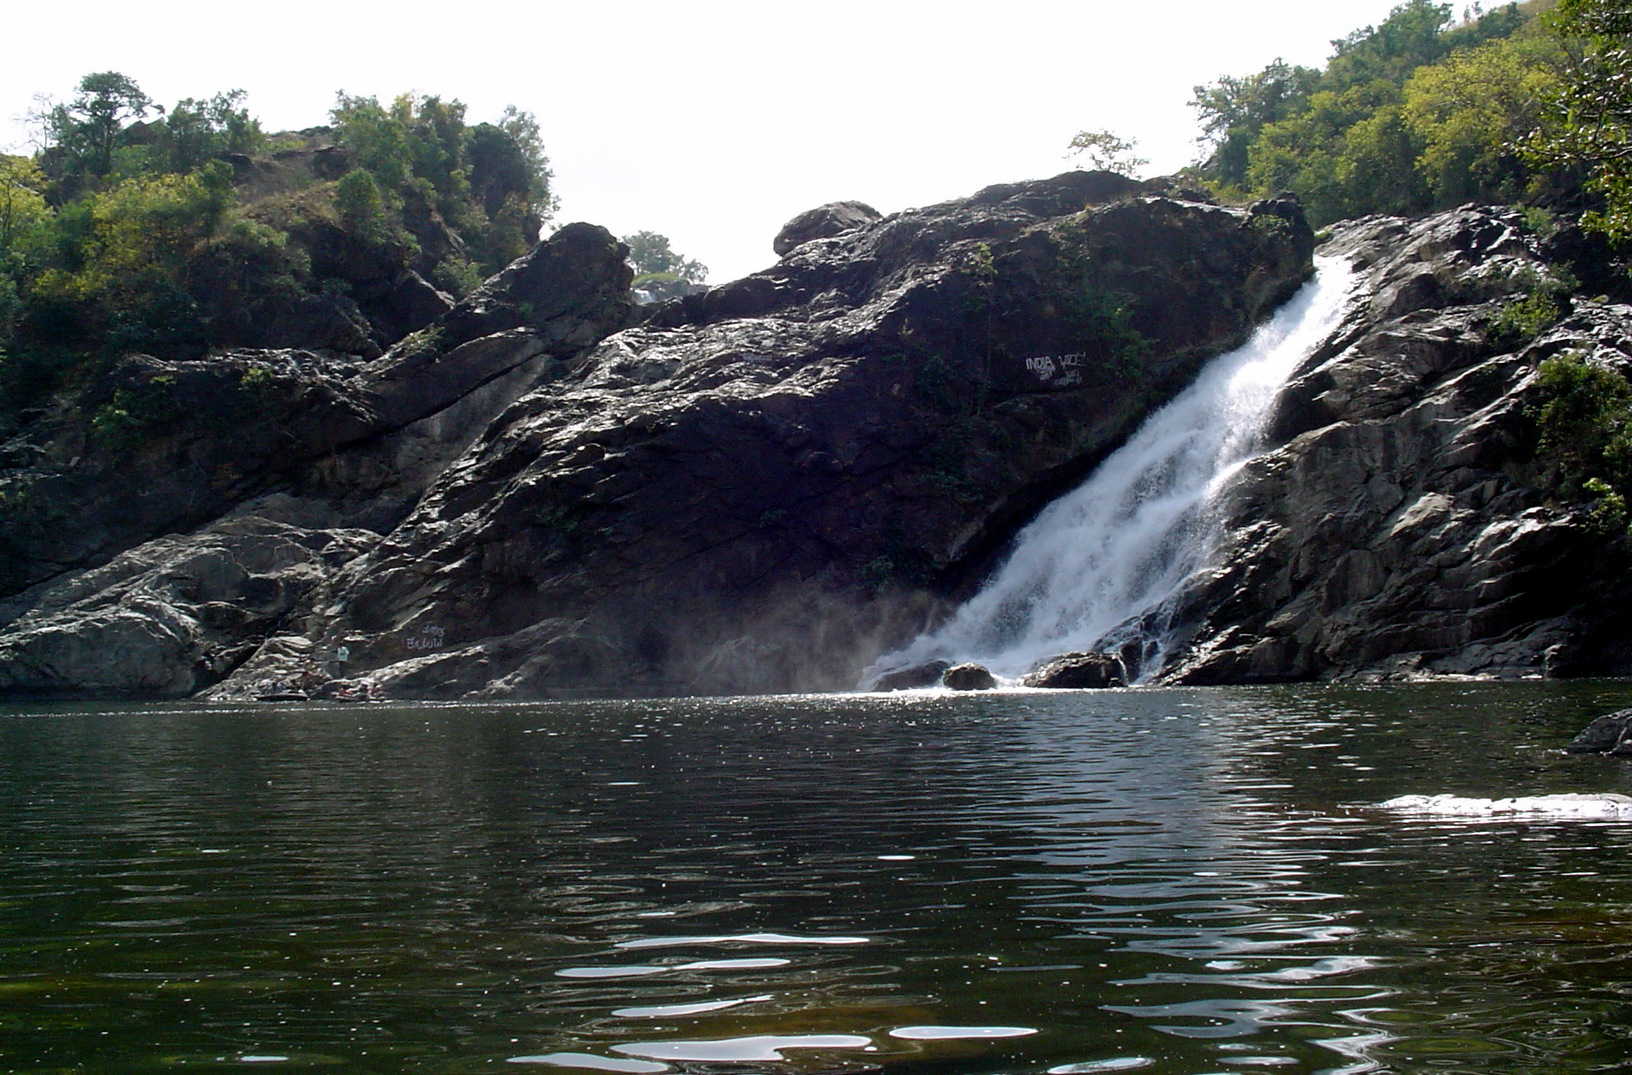 Barachukki and Gaganachukki are twin falls located at Shivanasamudra, some 125km south of Bangalore, near to Mysore